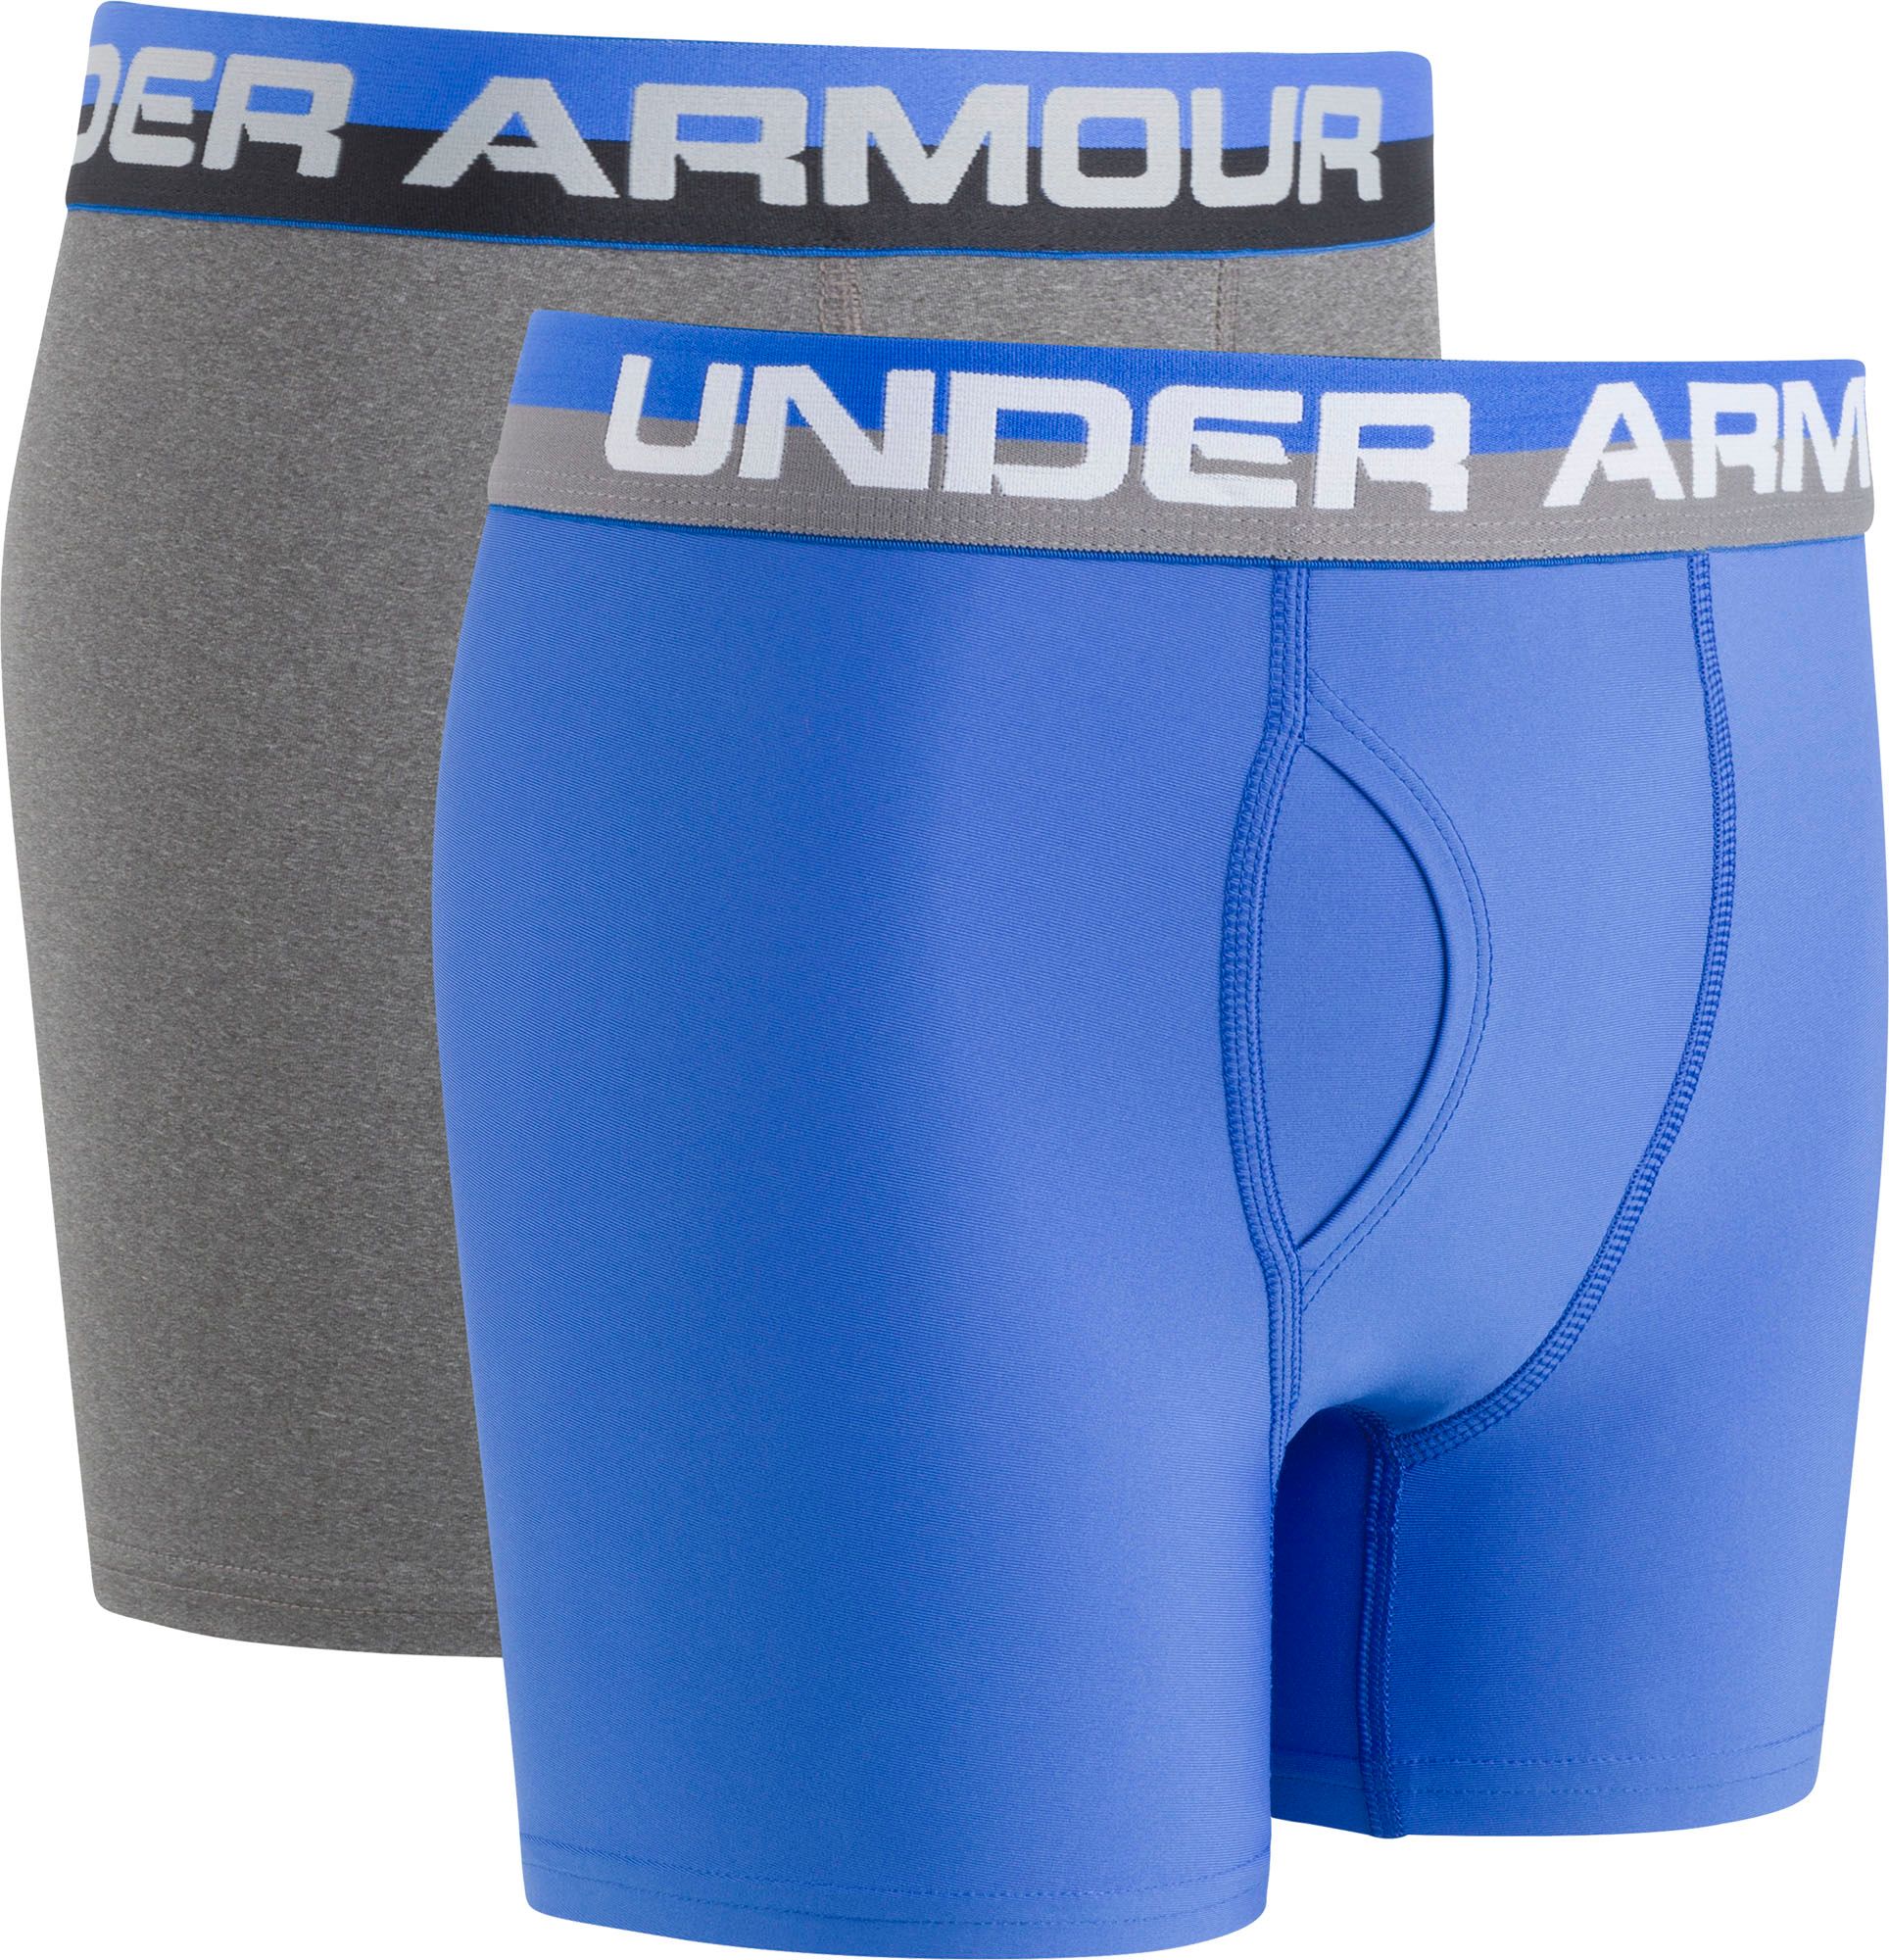 body armour underwear